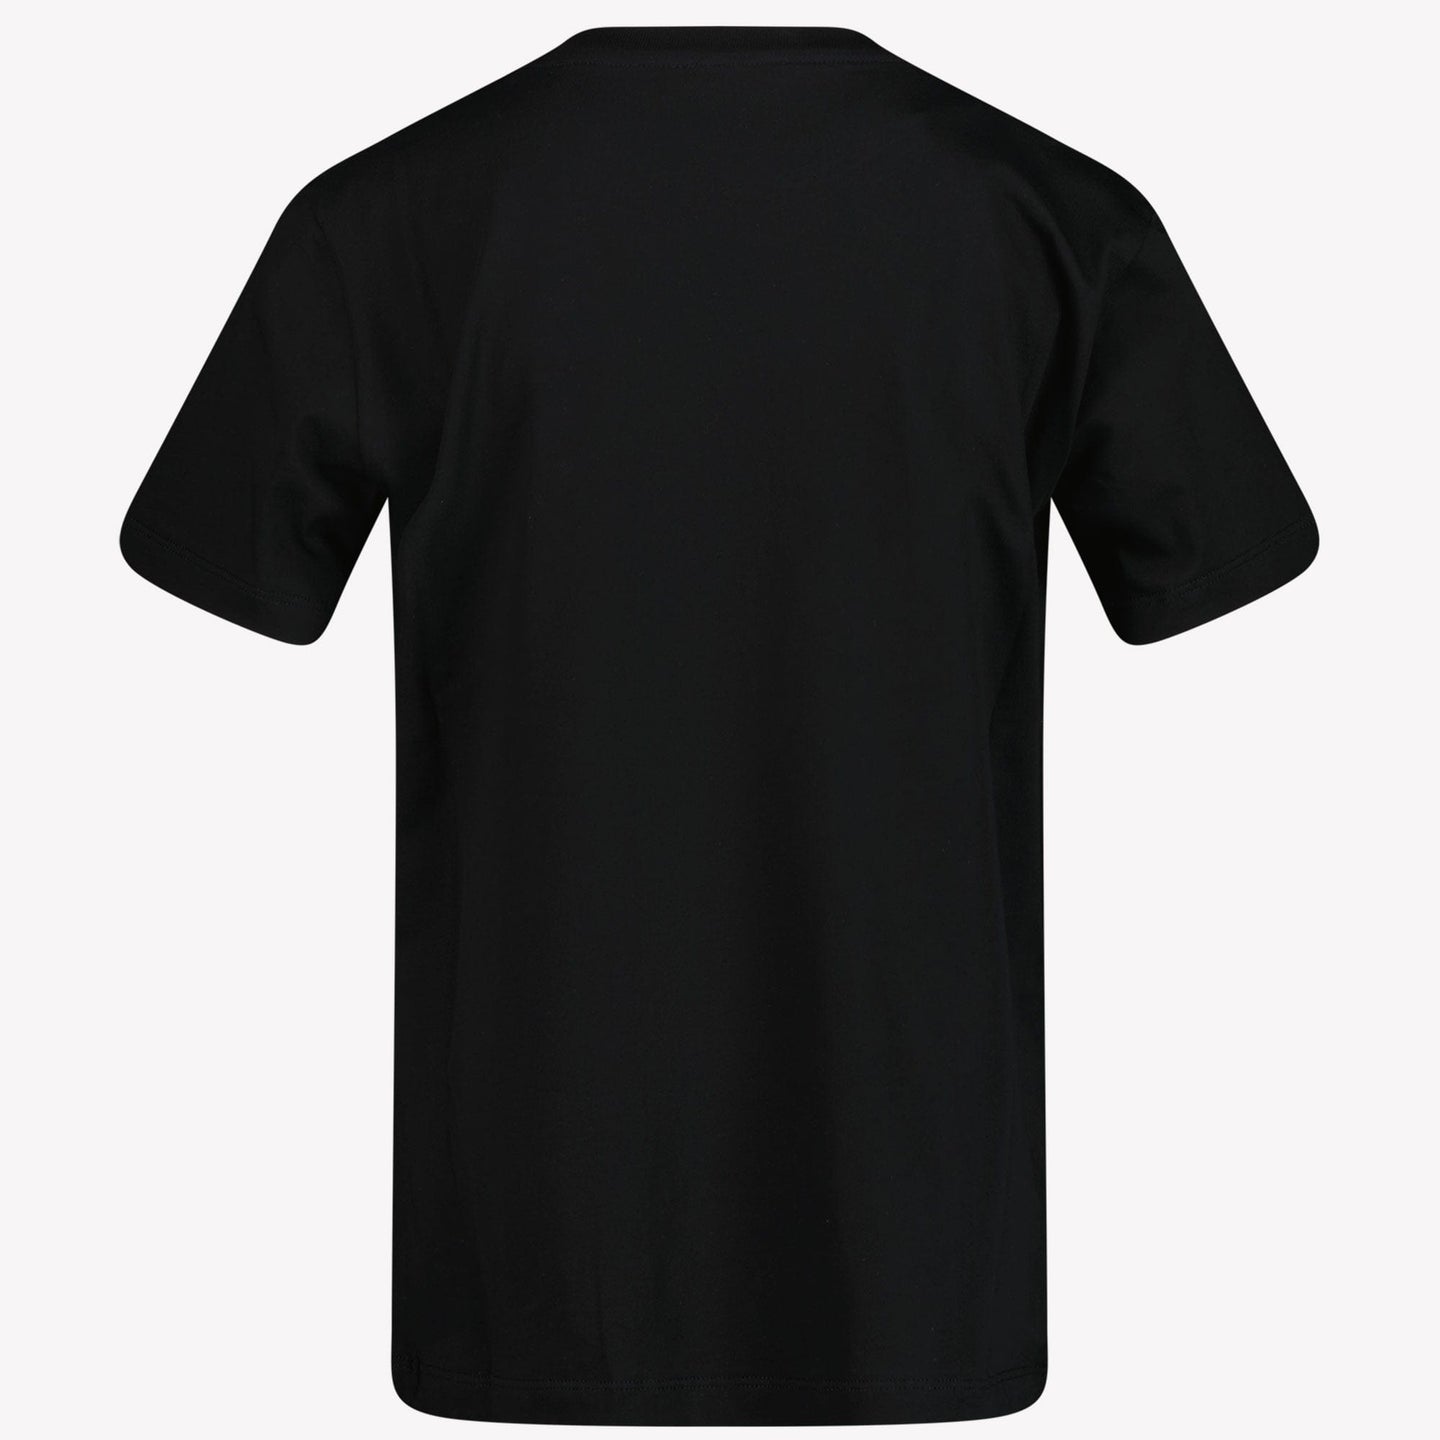 Balmain Unisex t-skjorte svart